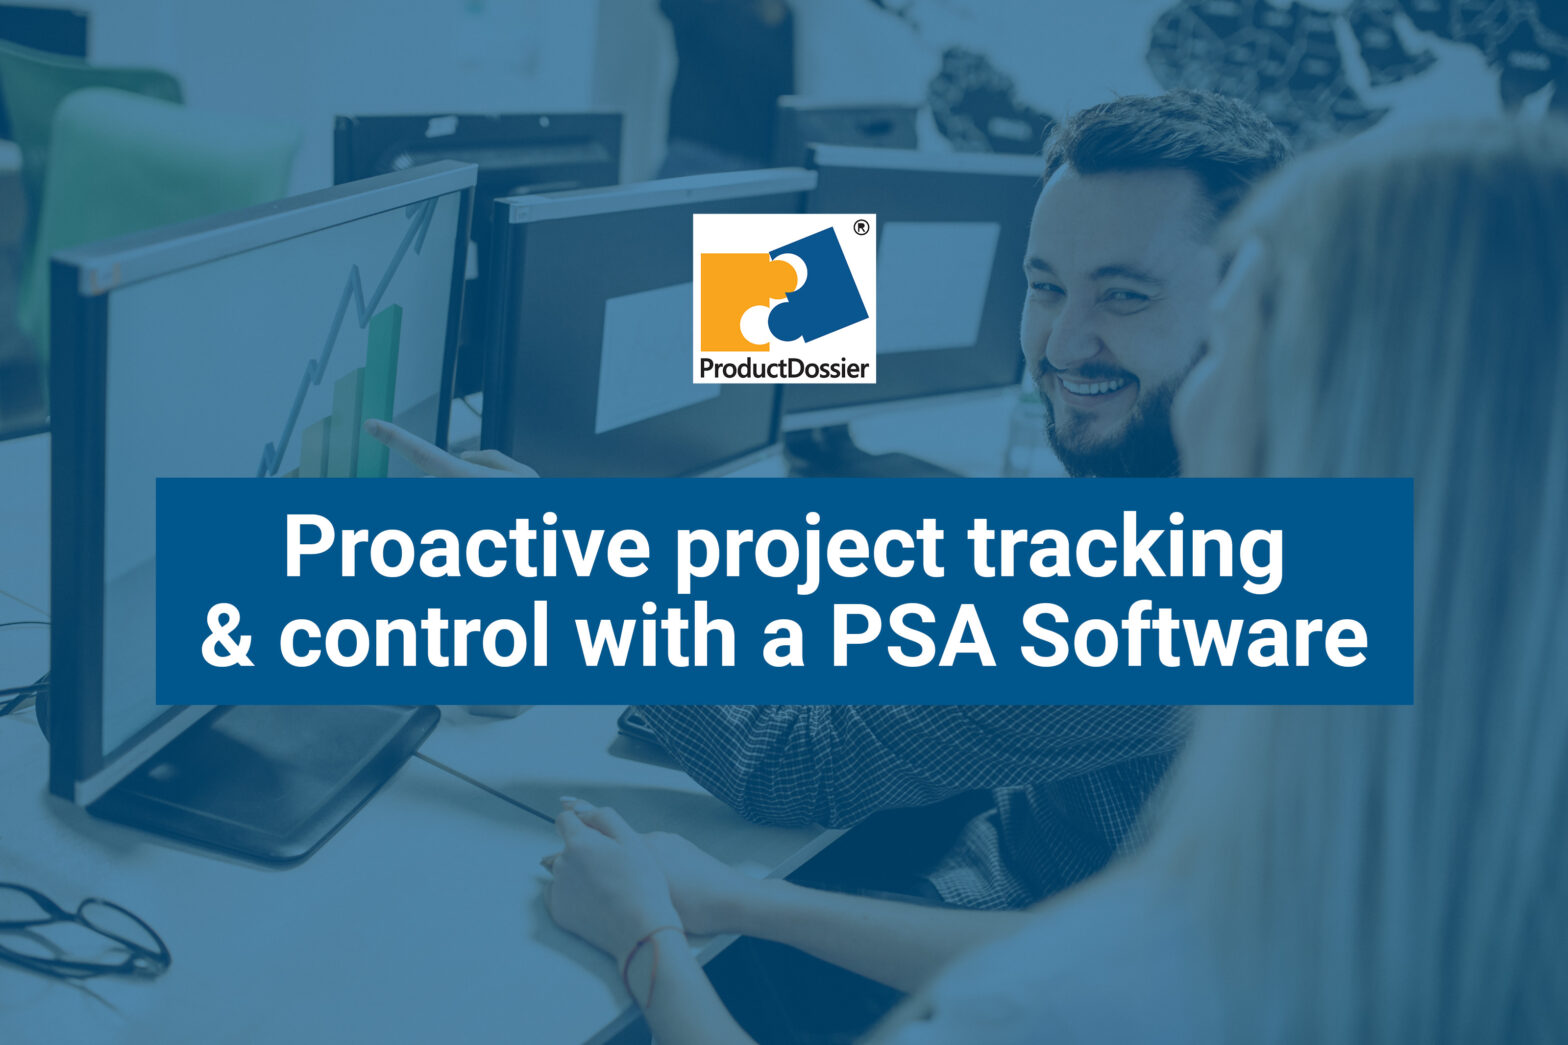 ProductDossier PSA Software